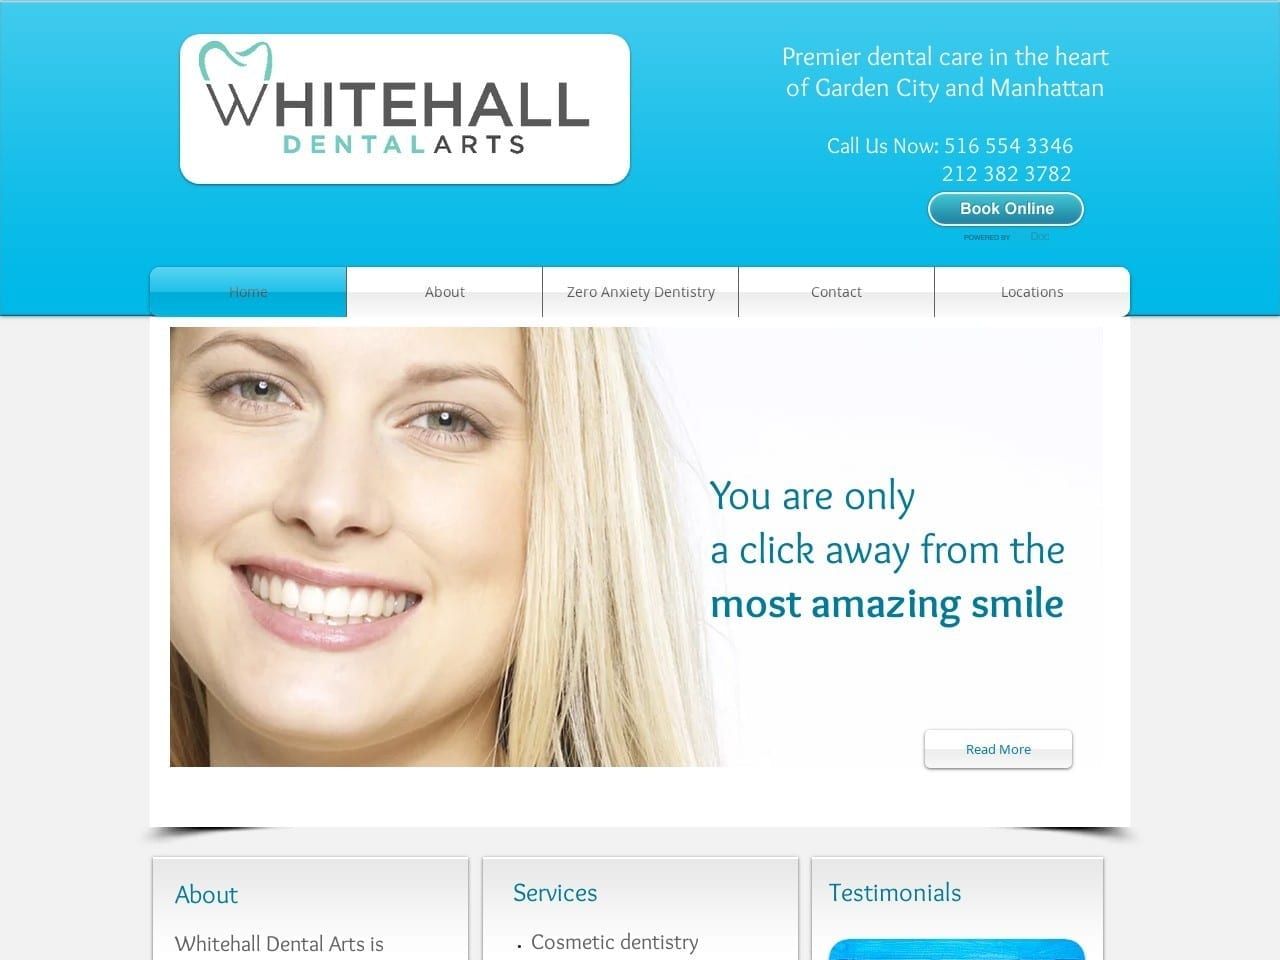 Whitehall dental arts website screenshot from whitehalldentalarts. Com